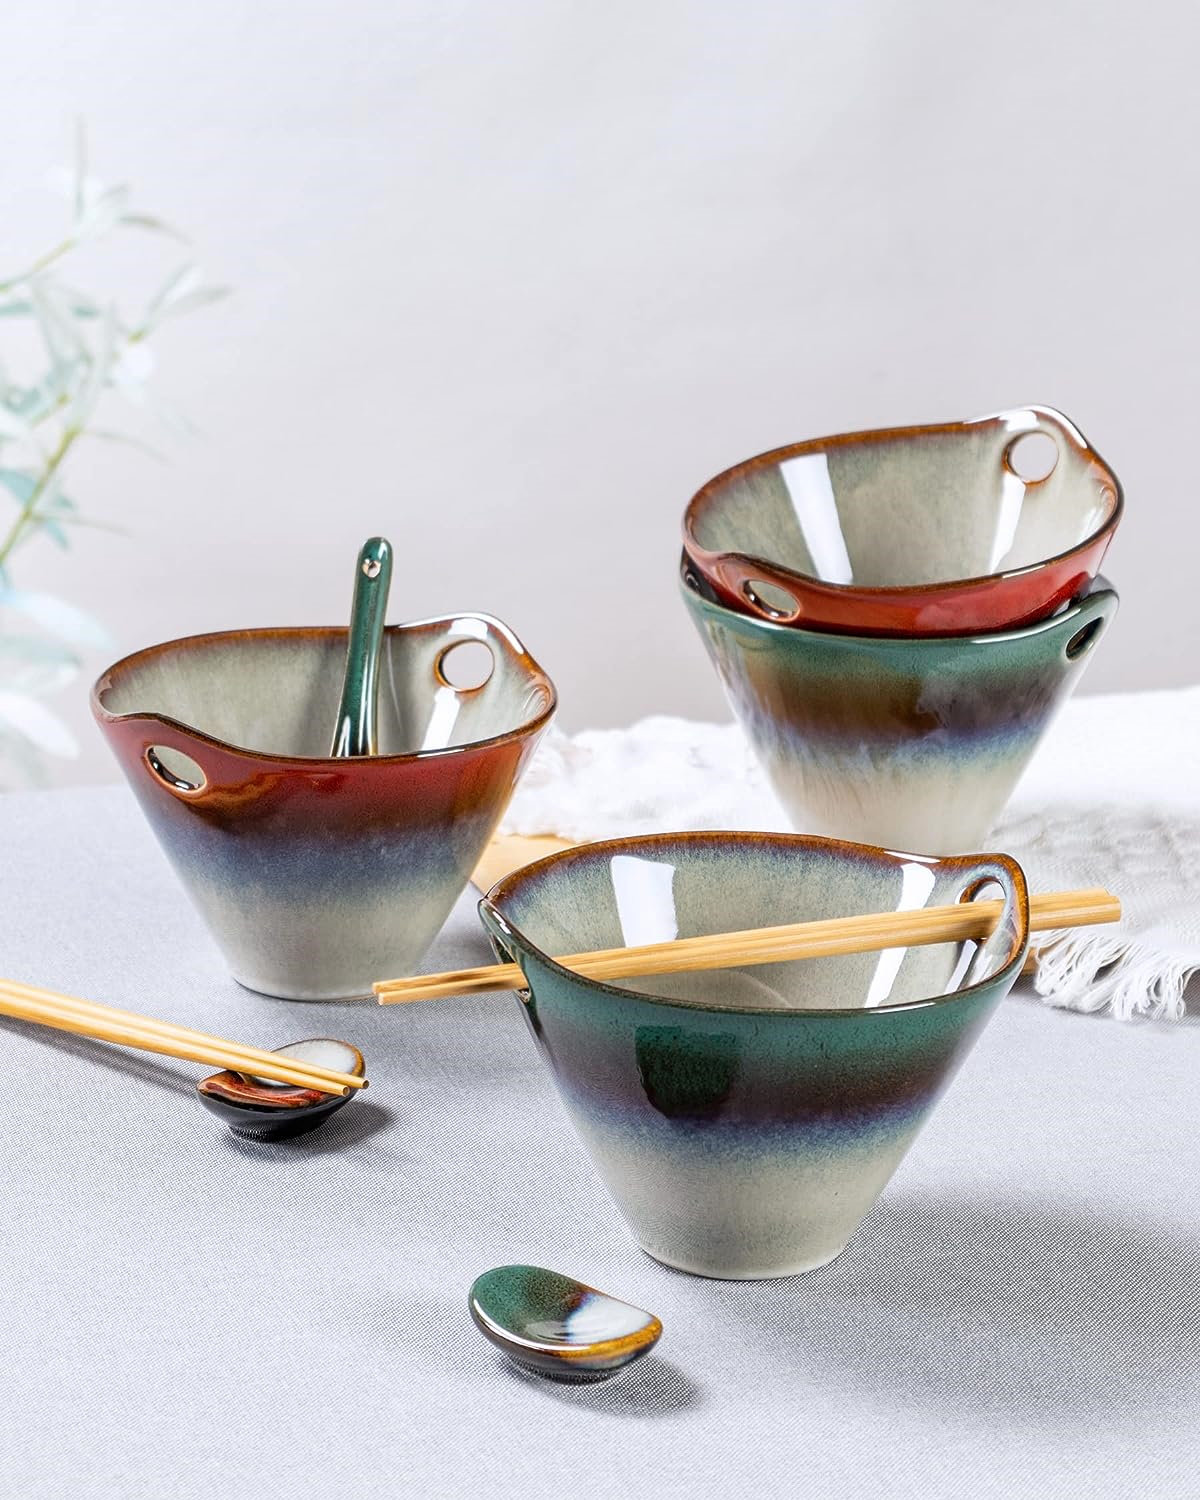 Wildon Home® Ceramic Japanese Ramen Noodle Bowls Set Of 2 - Deep Soup Bowls  With Spoons, Chopsticks And Holder, 20 Oz Serving Dishes For Pho, Udon  Noodle, Cereal - Reactive Green